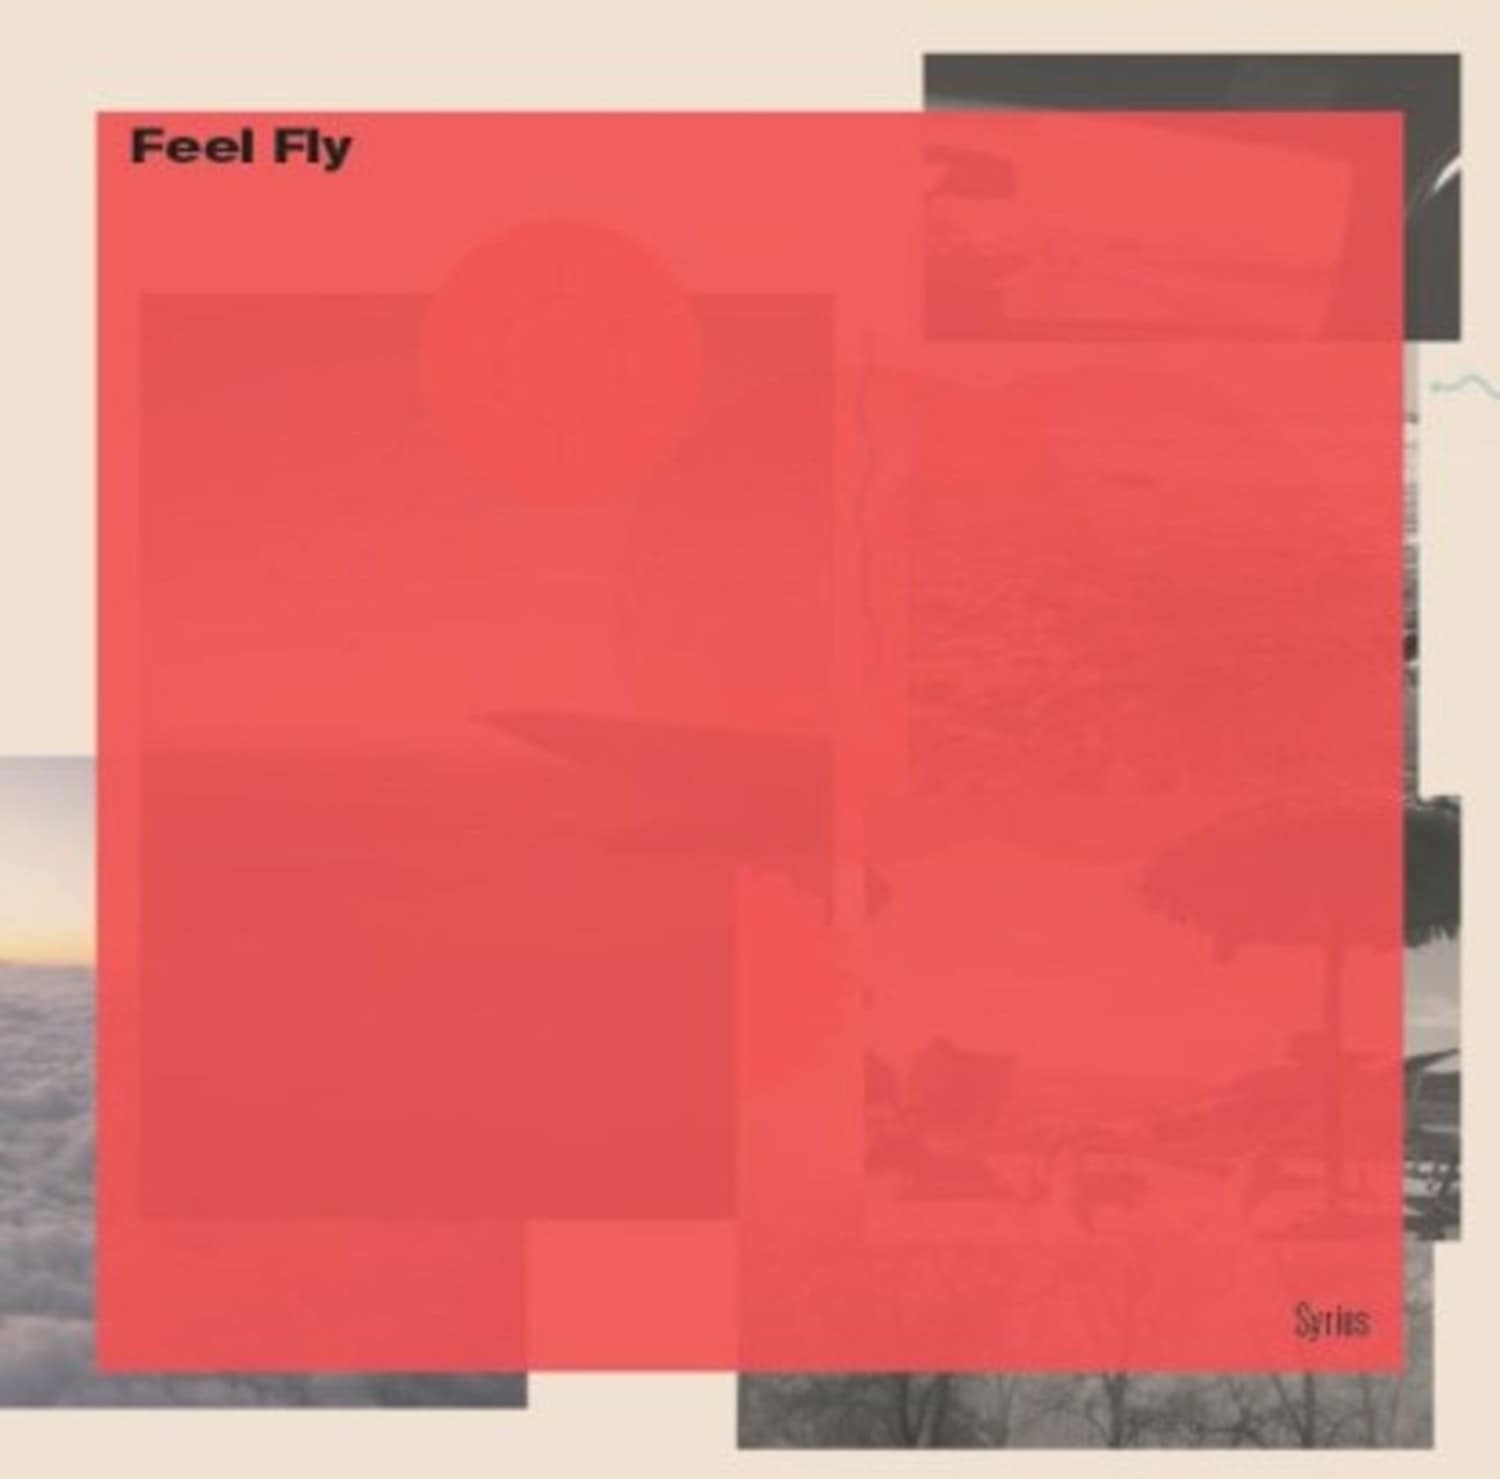 Feel Fly - SYRIUS 